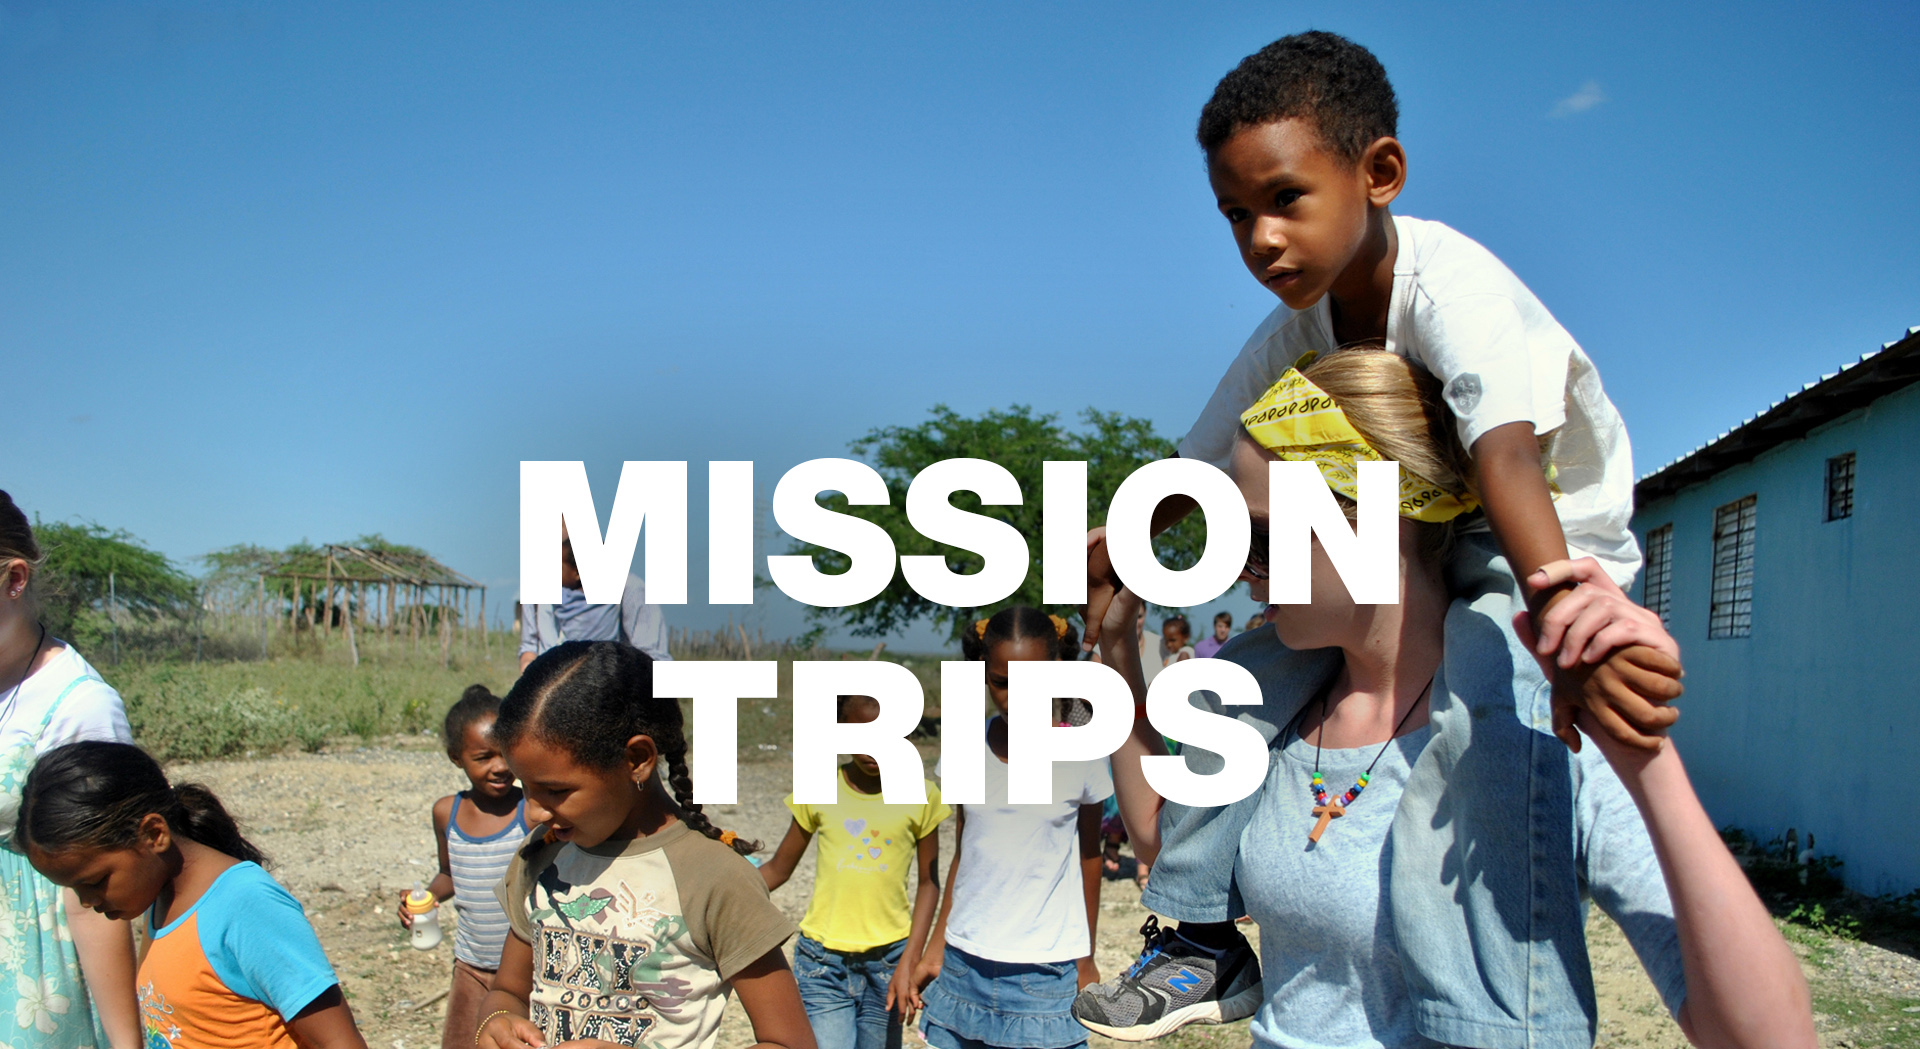 saddleback church mission trips